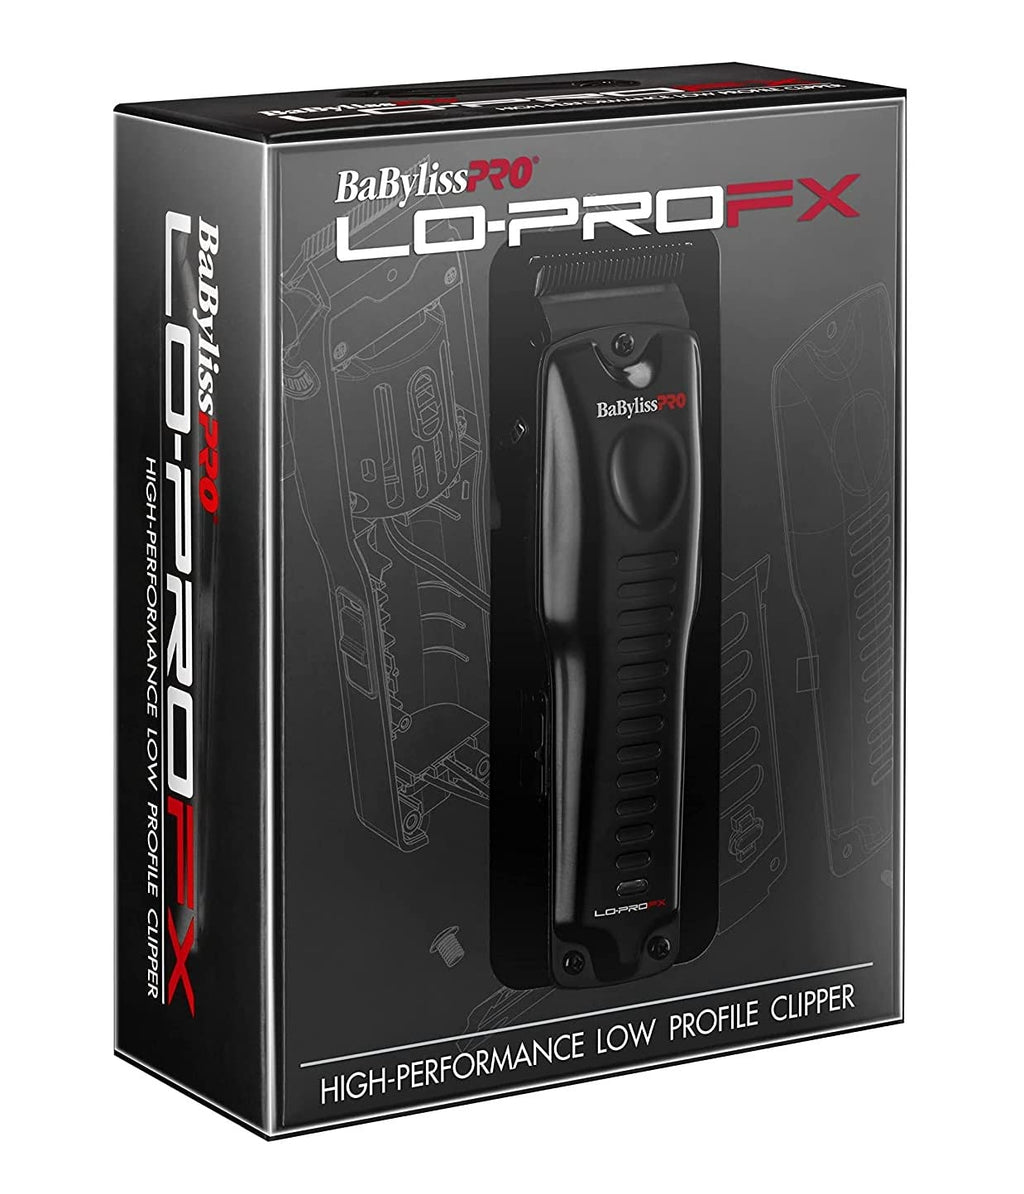 LO-PROFX High Performance Low Profile Clipper